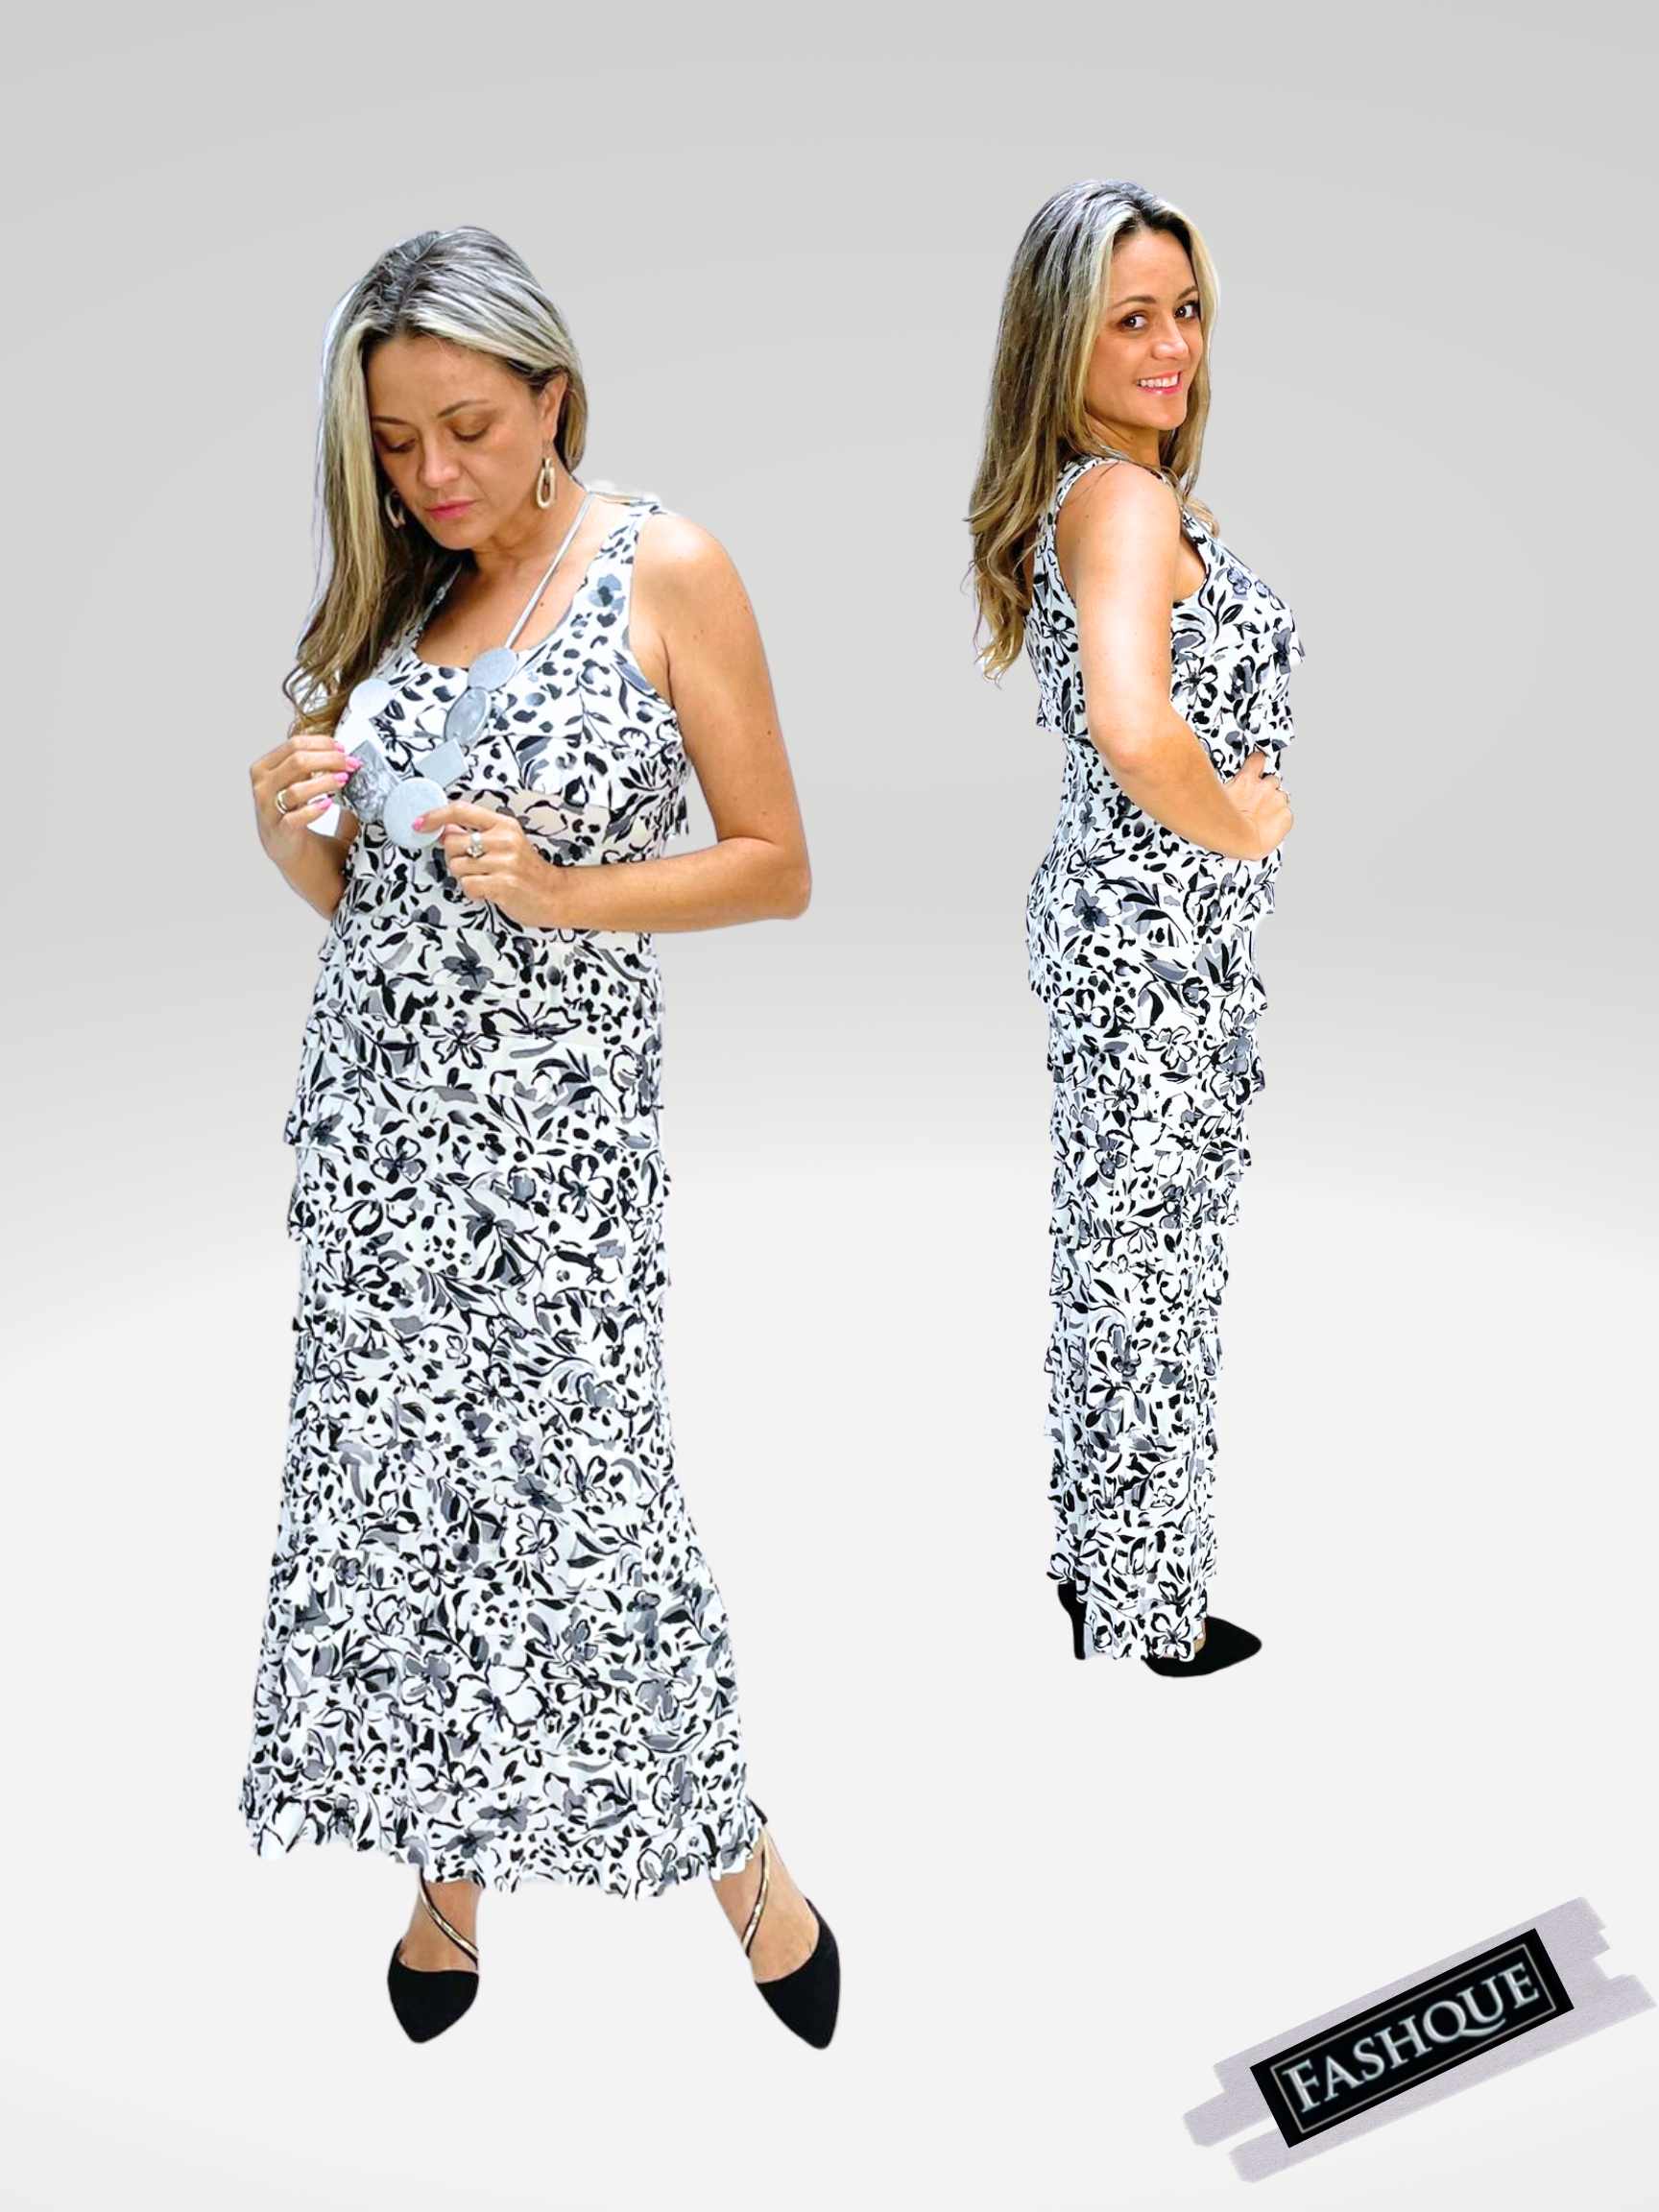 FASHQUE - Ruffle Maxi Dress Sleeveless PRINTED - D211